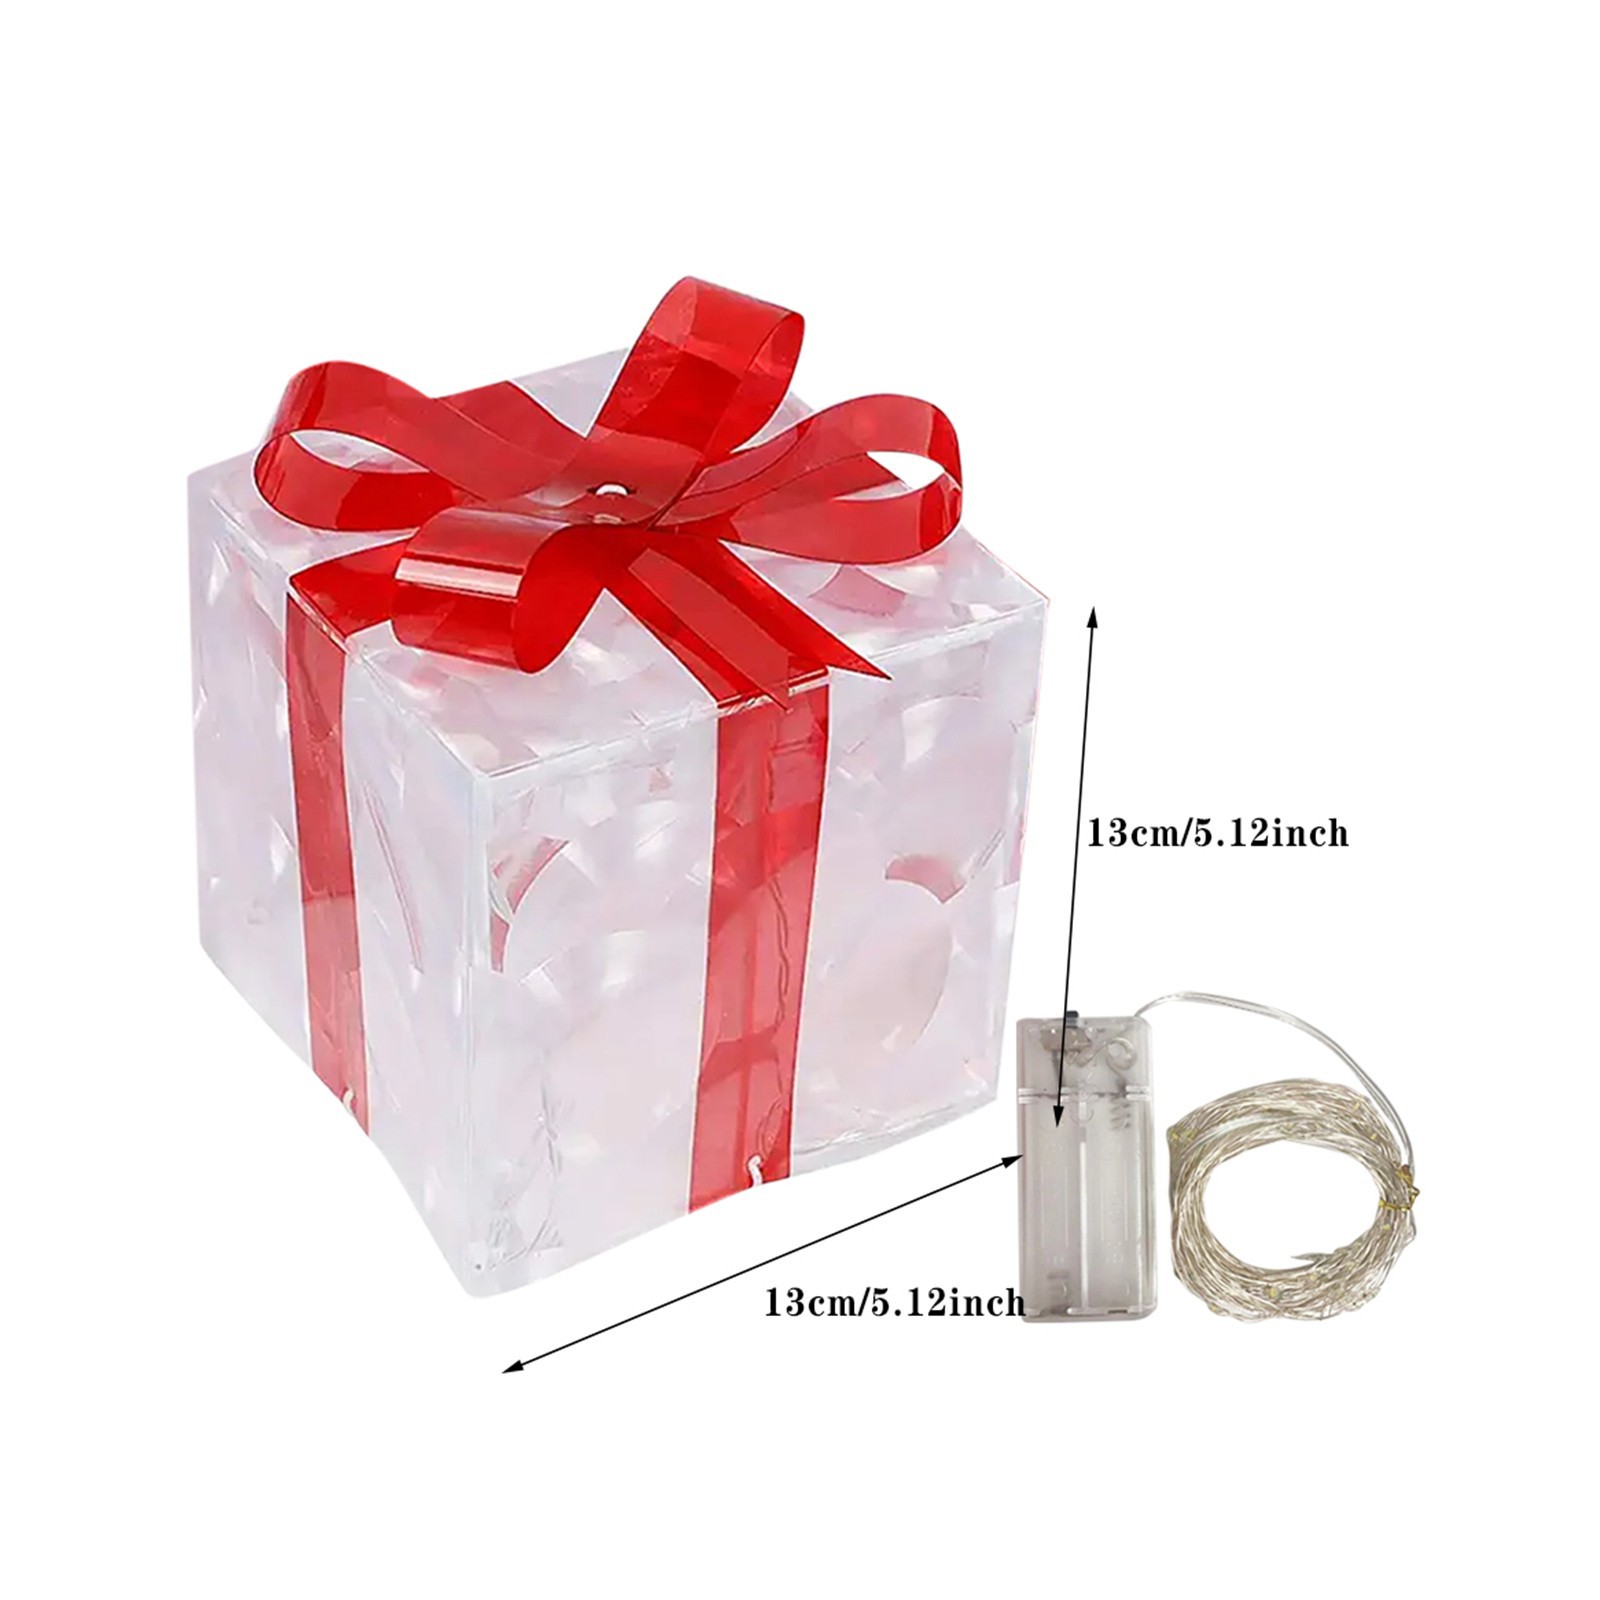 Luminious Mini Gift Box Set